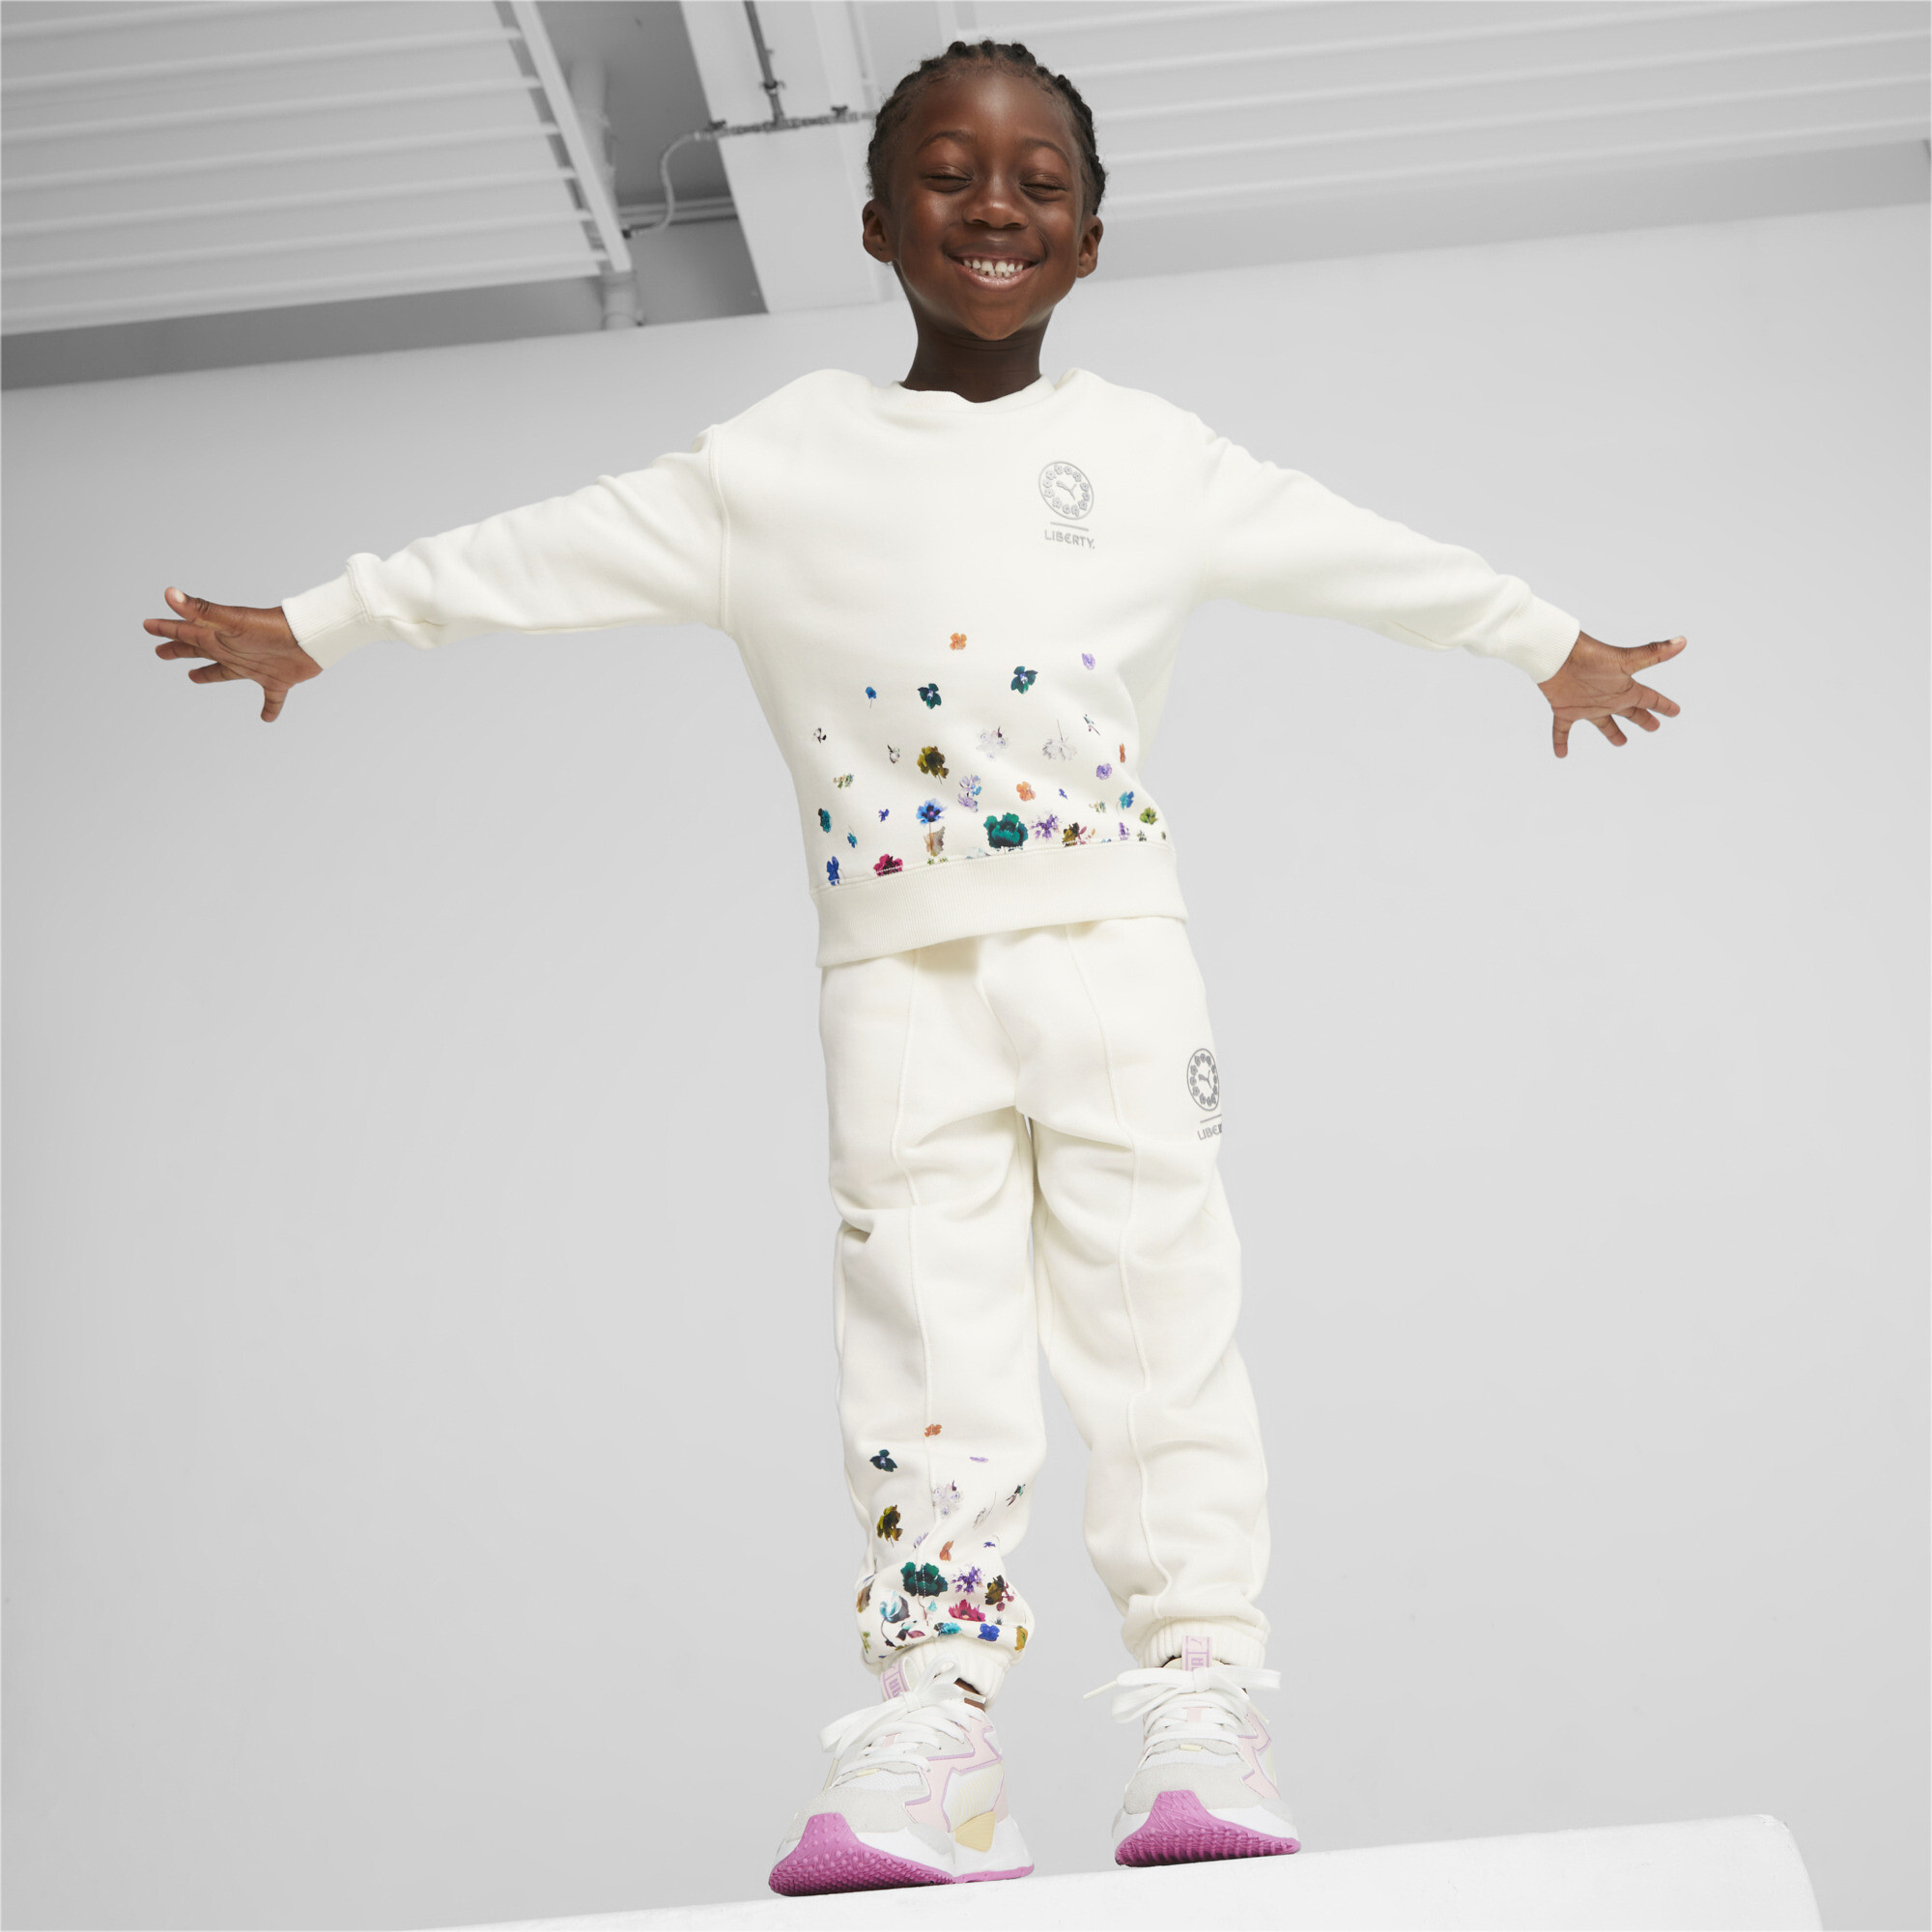 PUMA X LIBERTY Sweatpants In White, Size 9-10 Youth